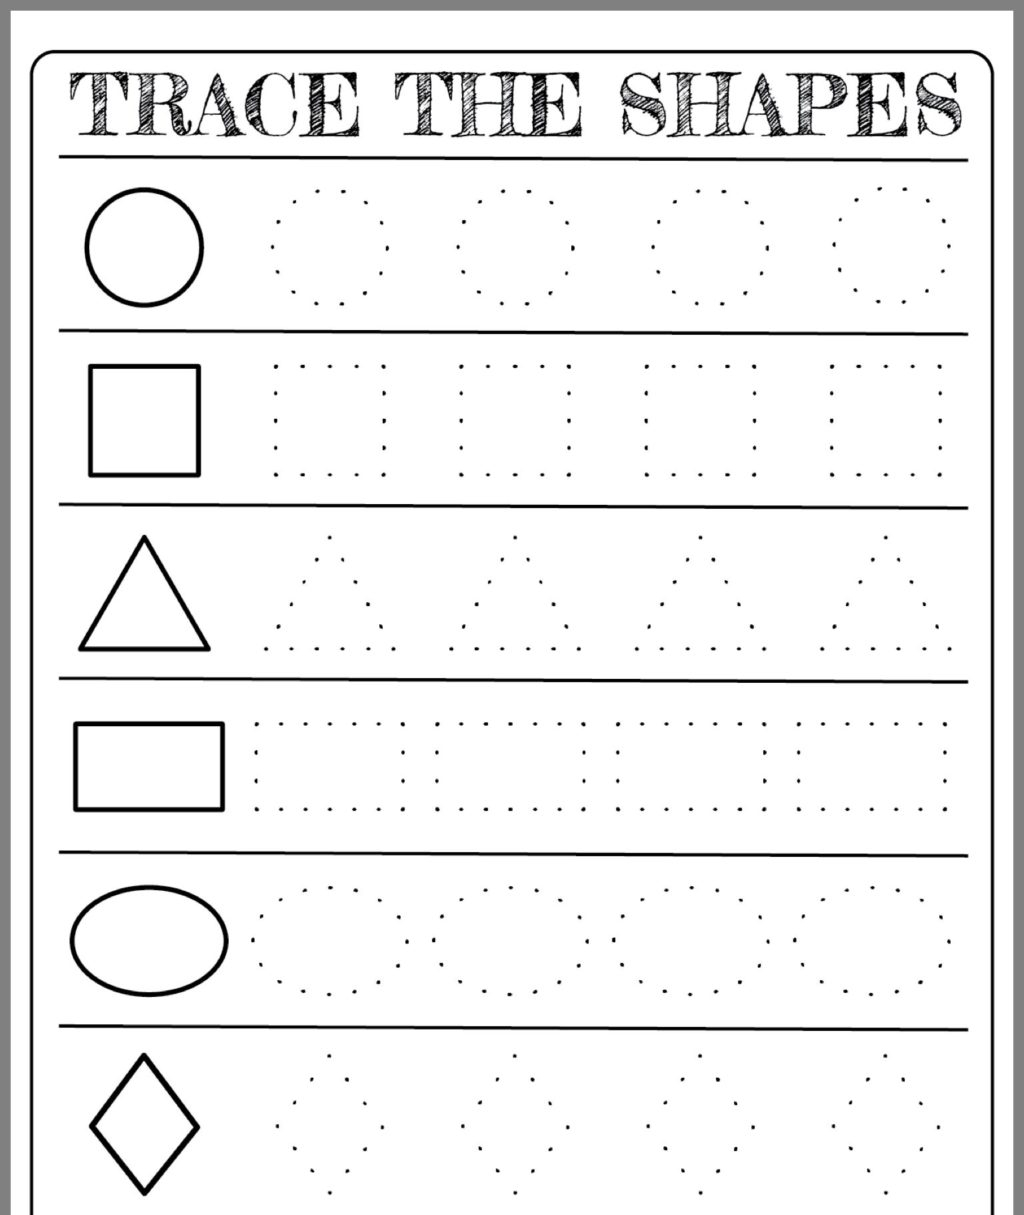 Worksheet ~ Freerintable Shapes Worksheets For Toddlers